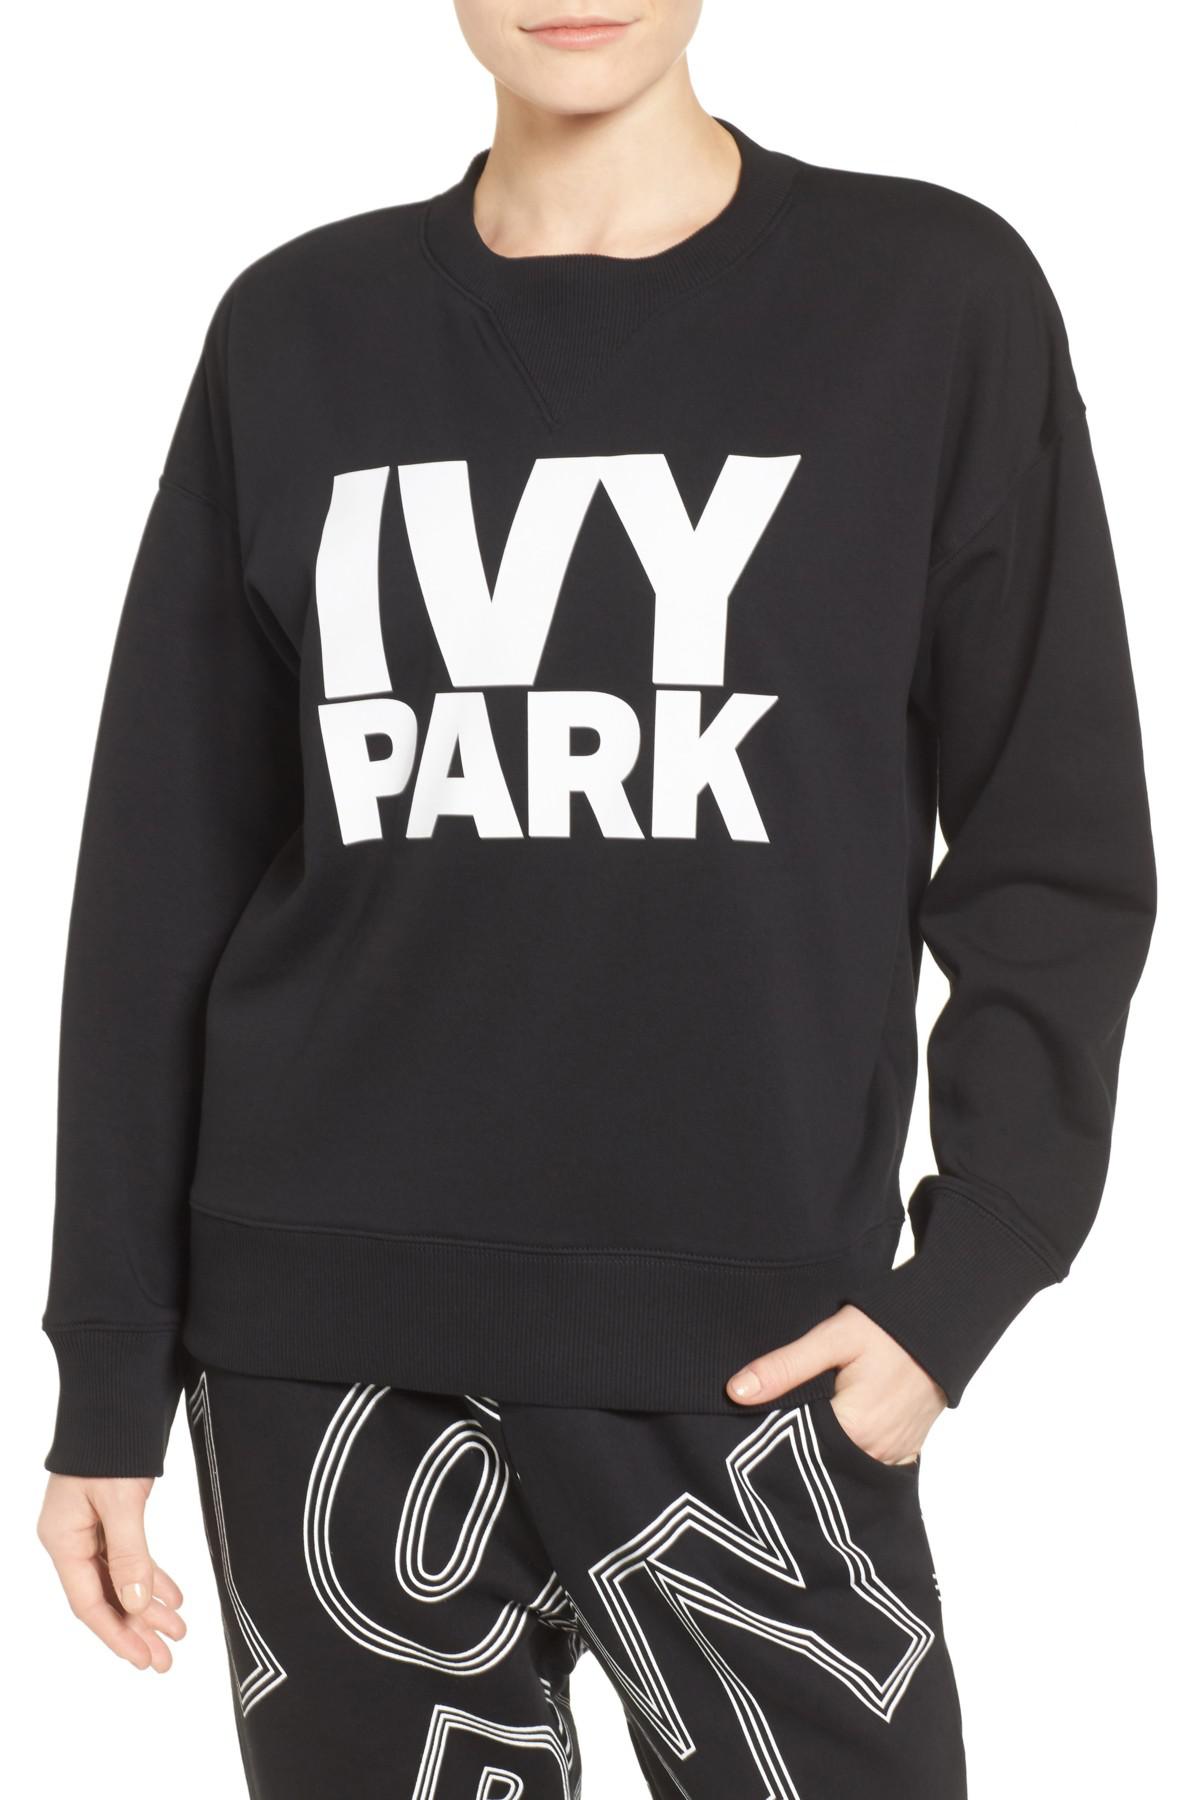 Lyst - Ivy Park Logo Sweatshirt in Black